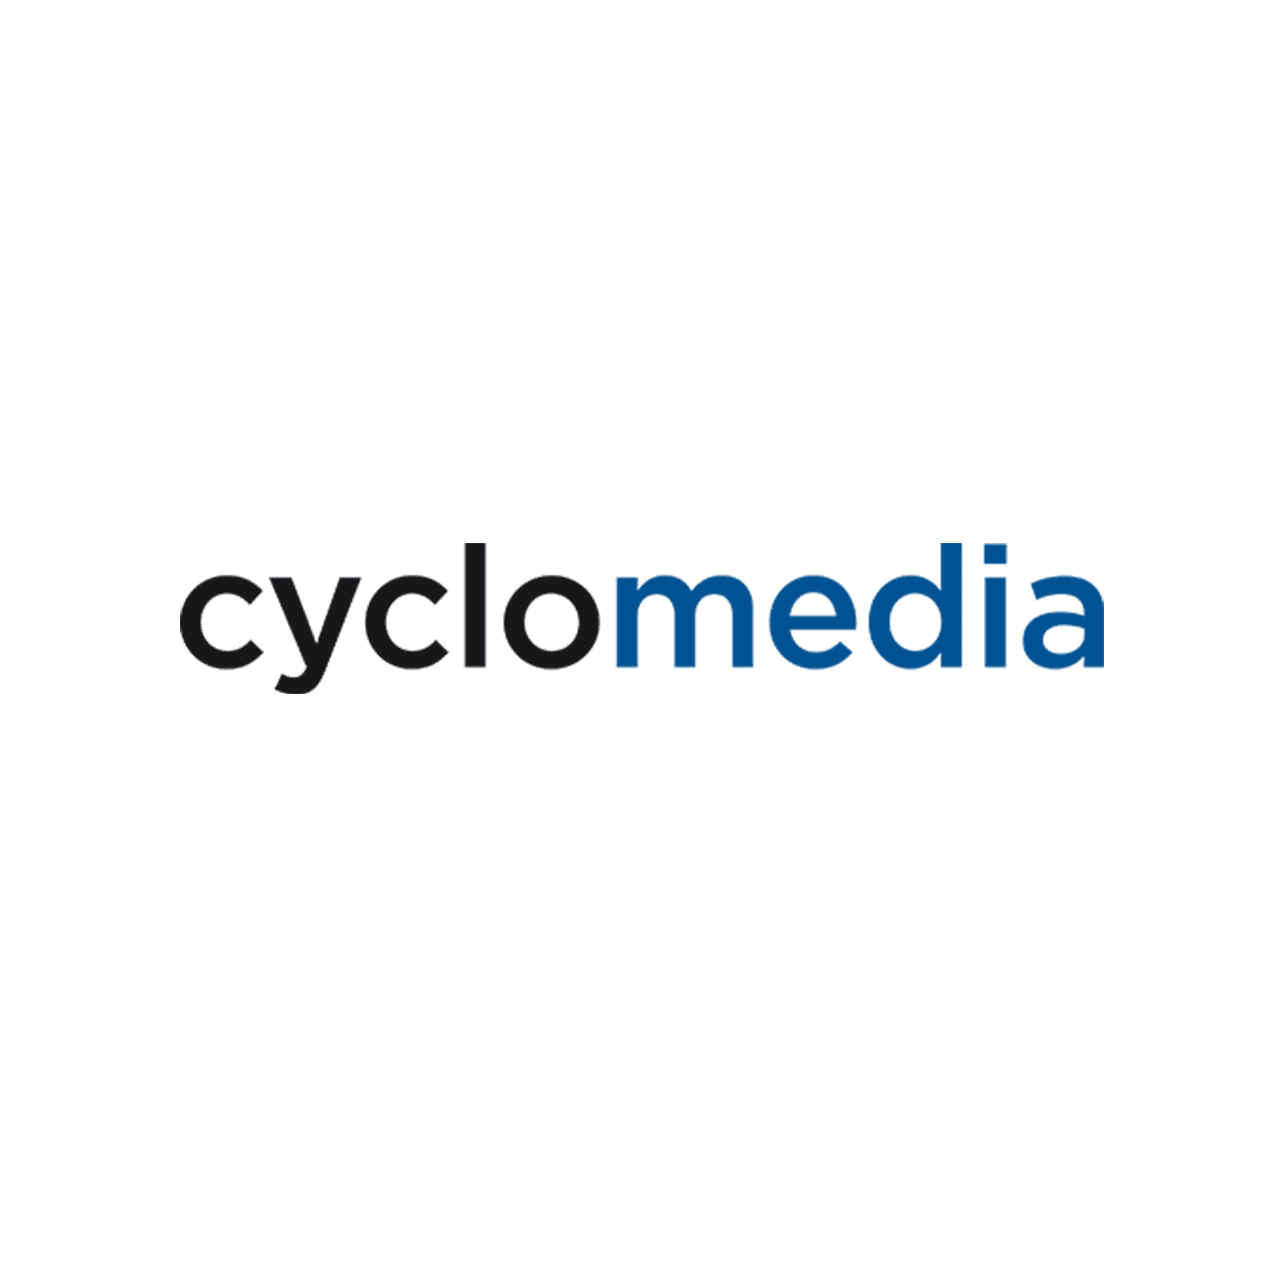 CycloMedia